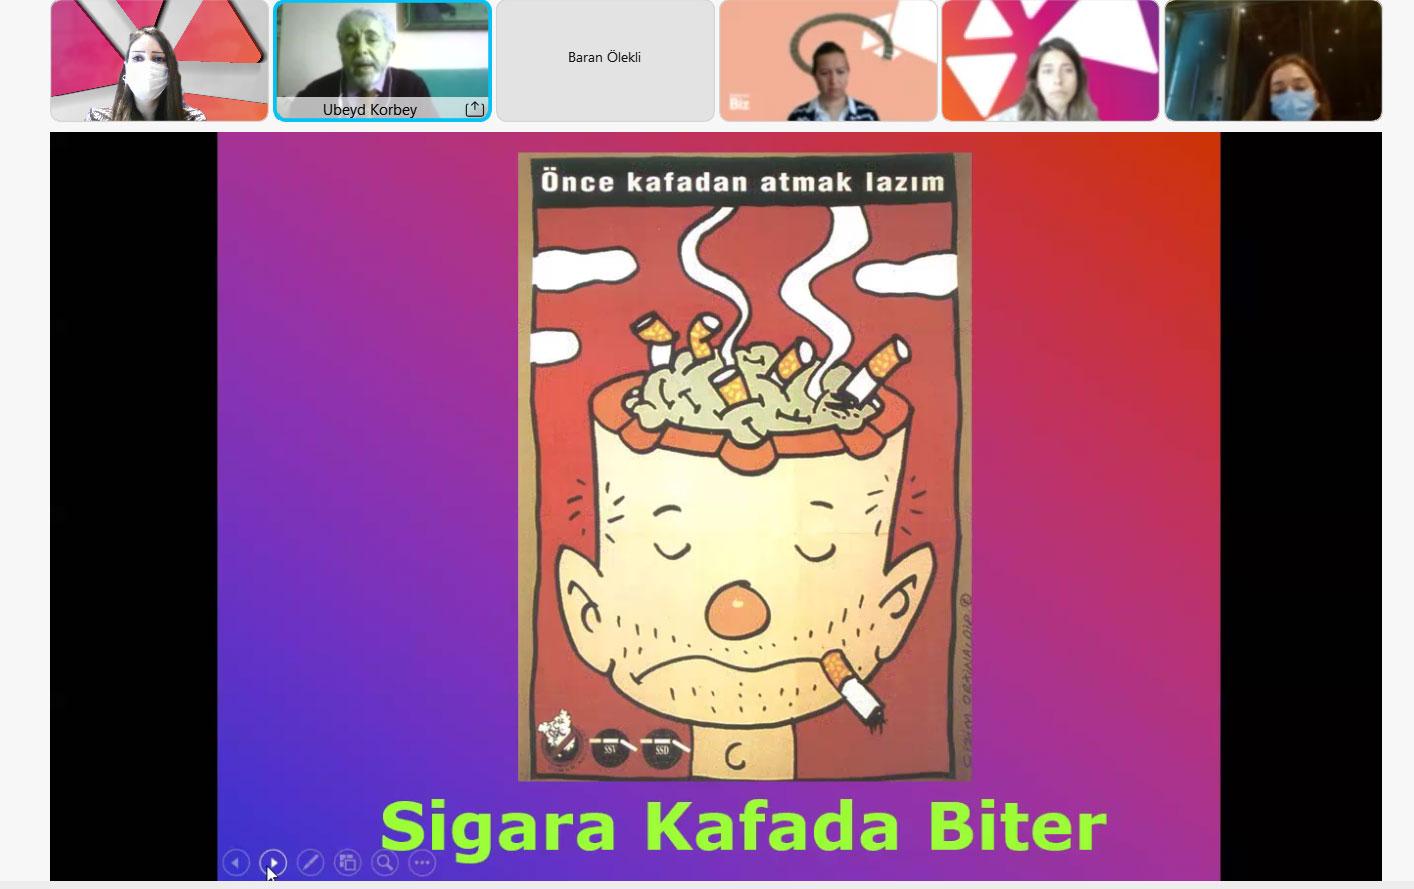  An Awareness Seminar with the Anti-Smoking Organization of Turkey on the World Smoking Boycott Day! 